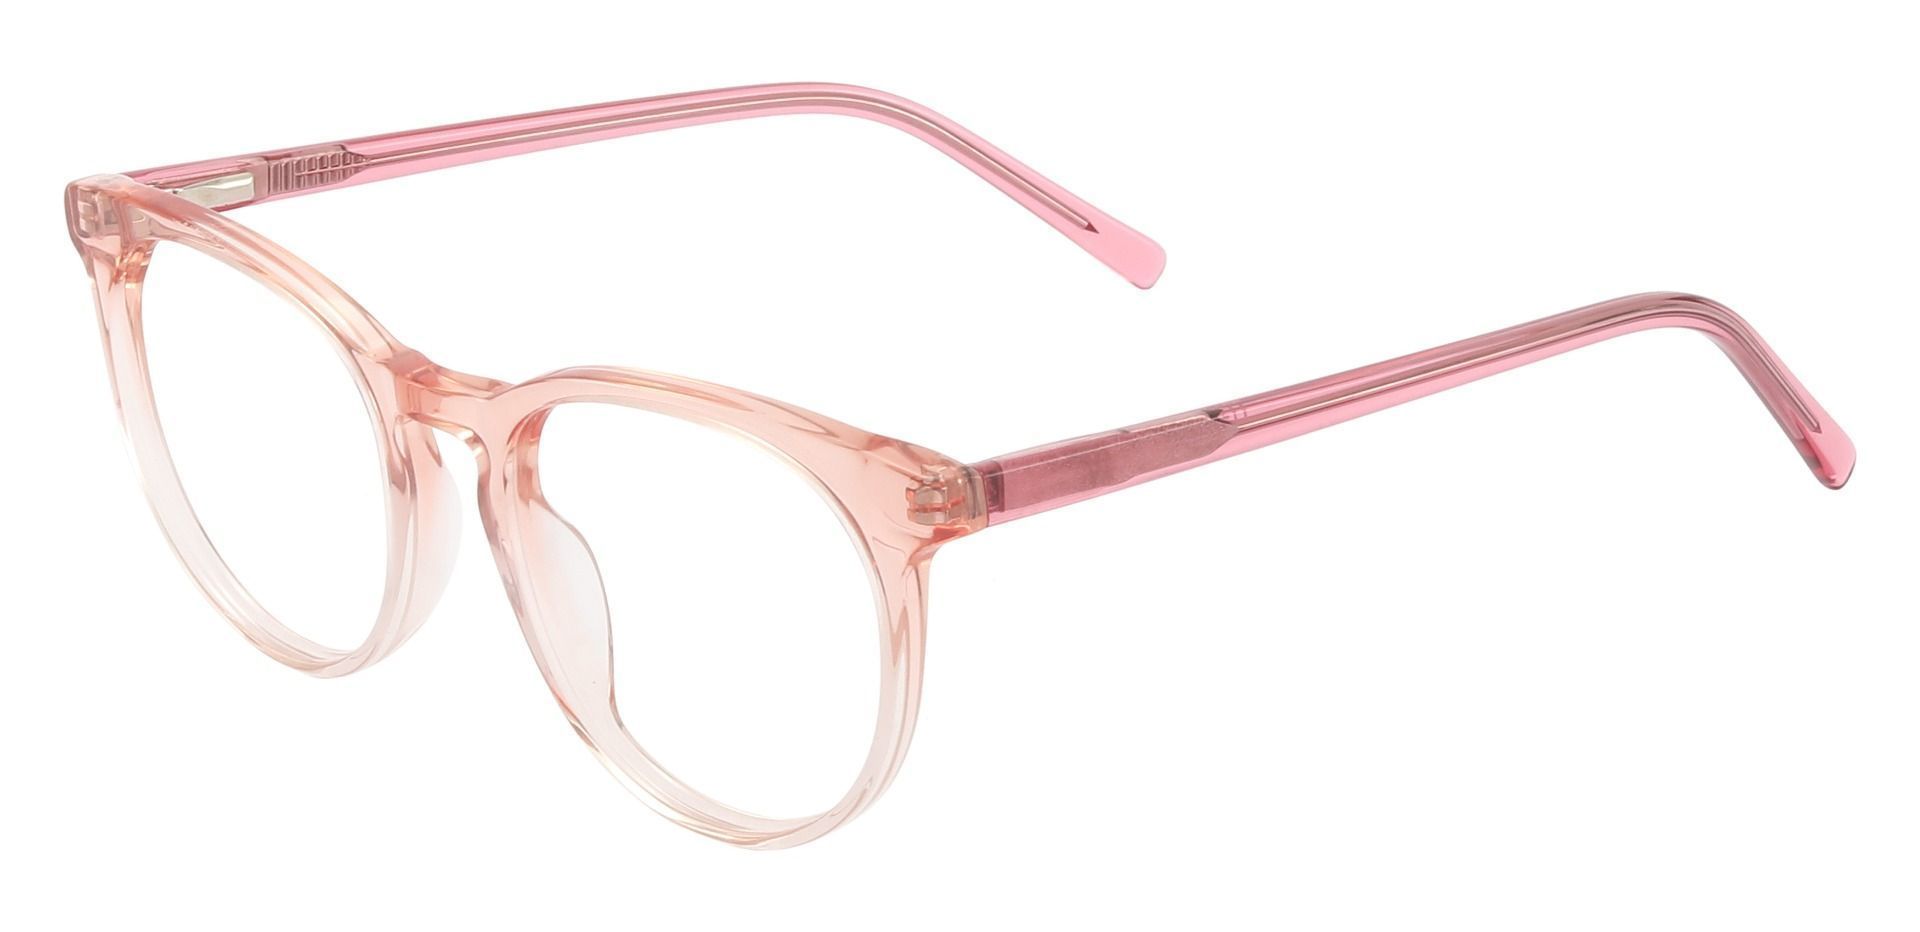 Tybee Oval Prescription Glasses - Pink